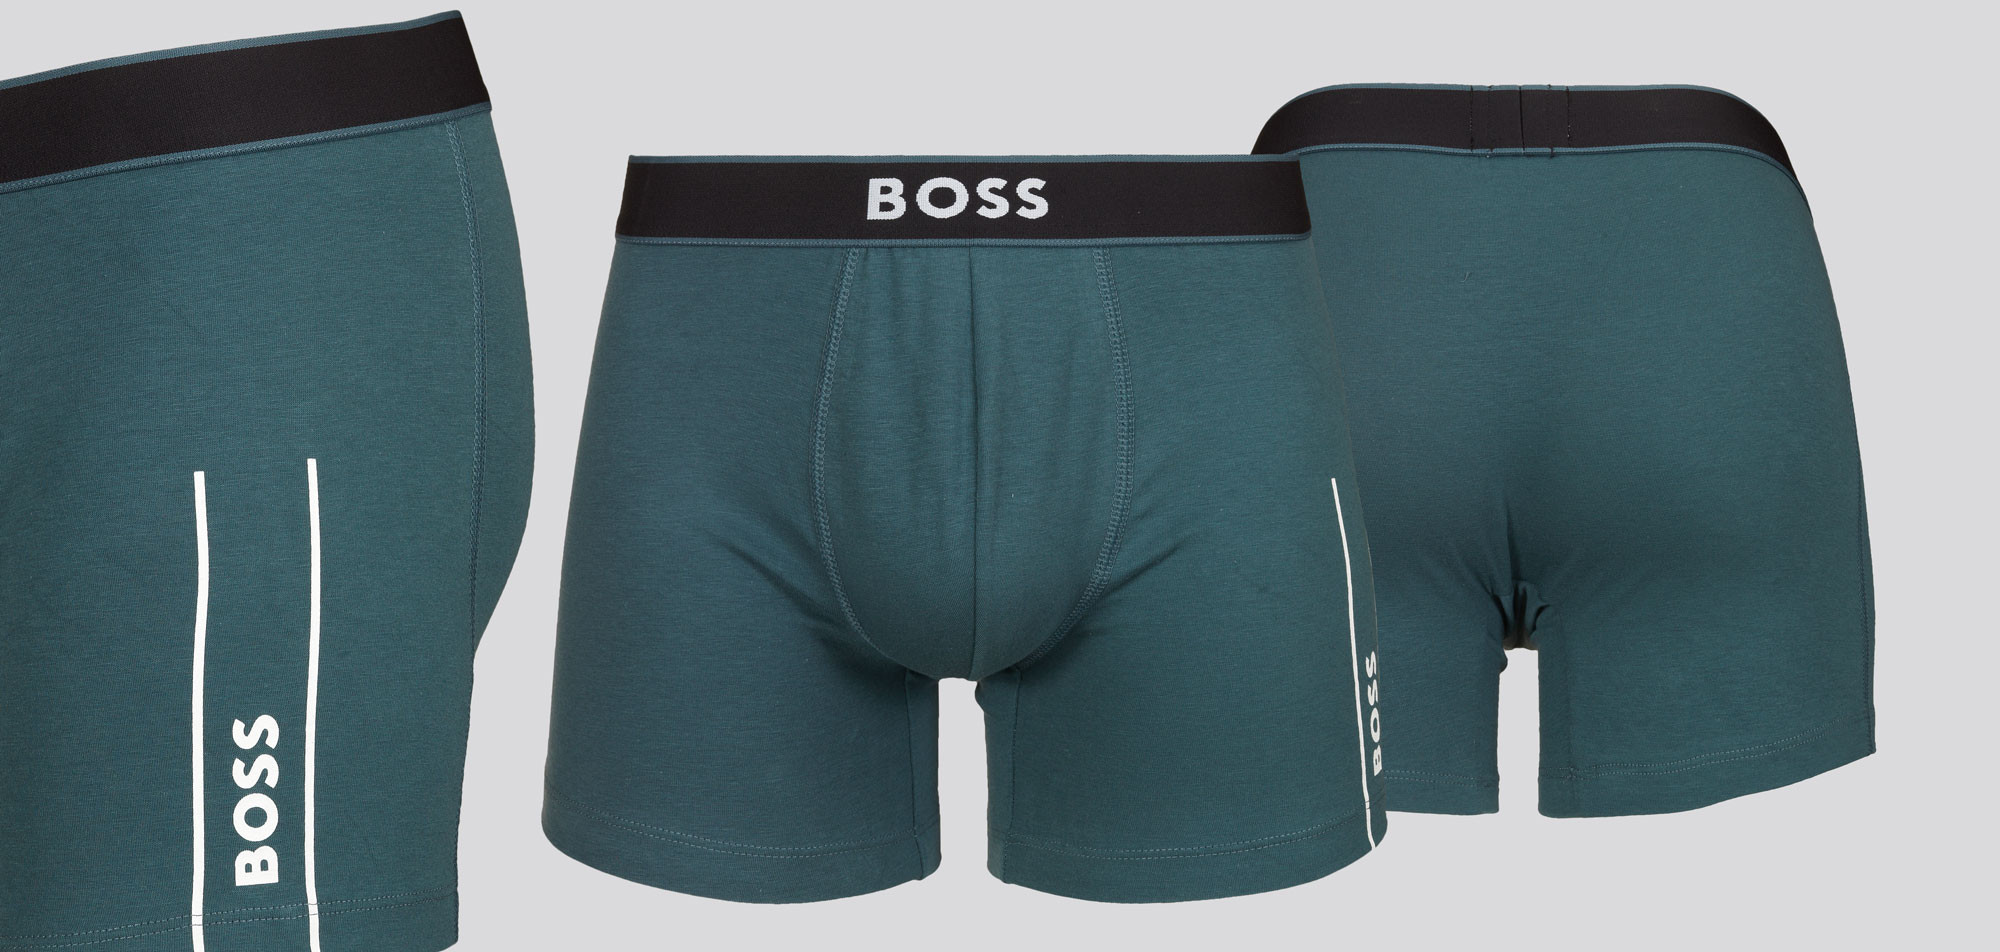 Boss Boxer Brief 020 24 Logo, color Nee